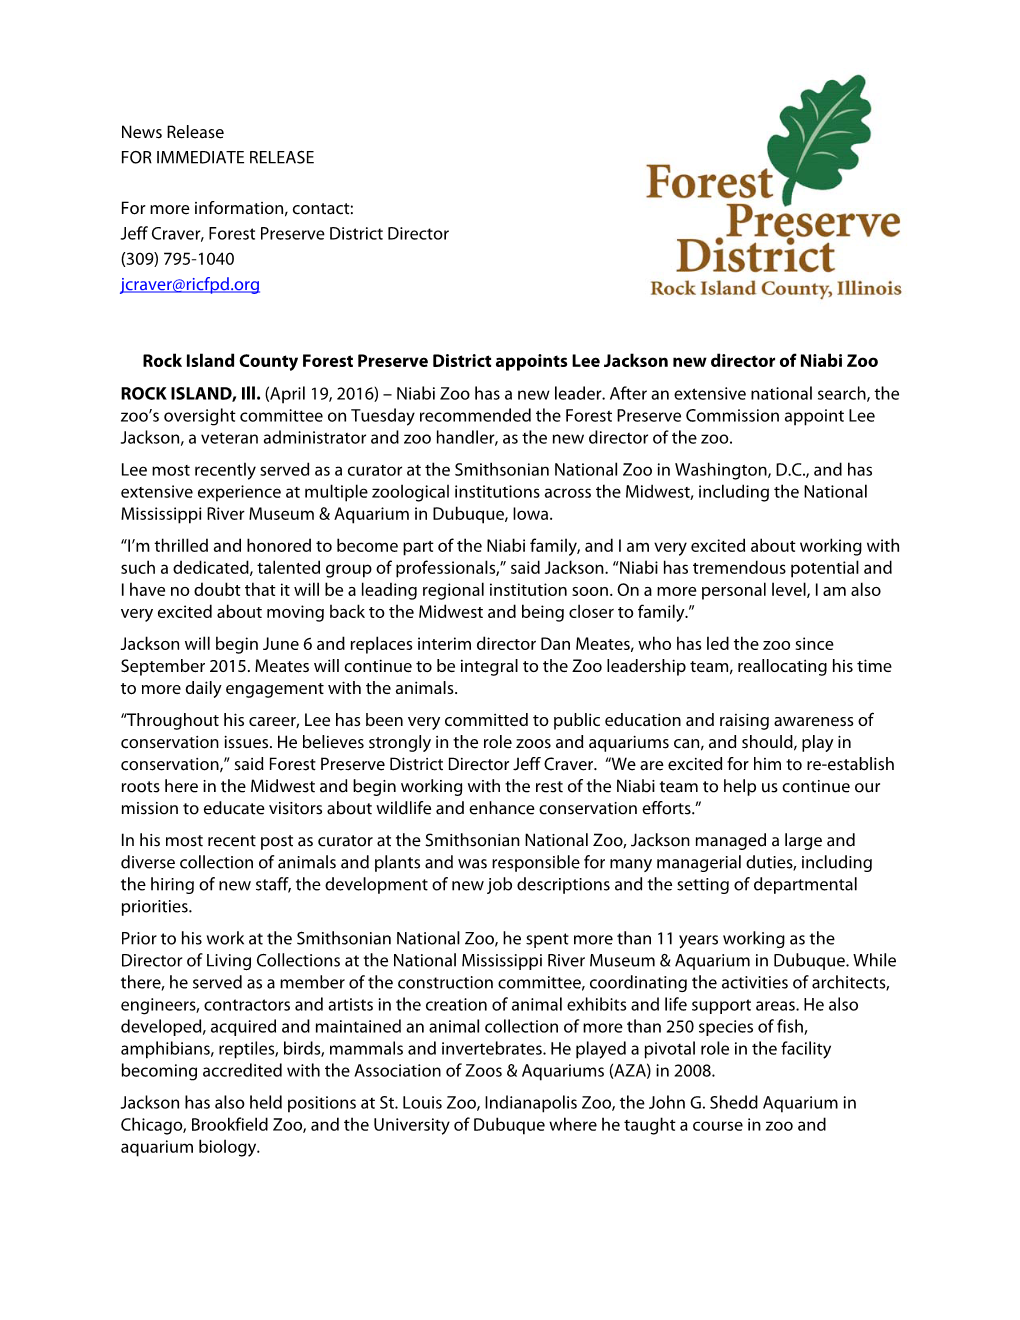 Jeff Craver, Forest Preserve District Director (309) 795-1040 Jcraver@Ricfpd.Org